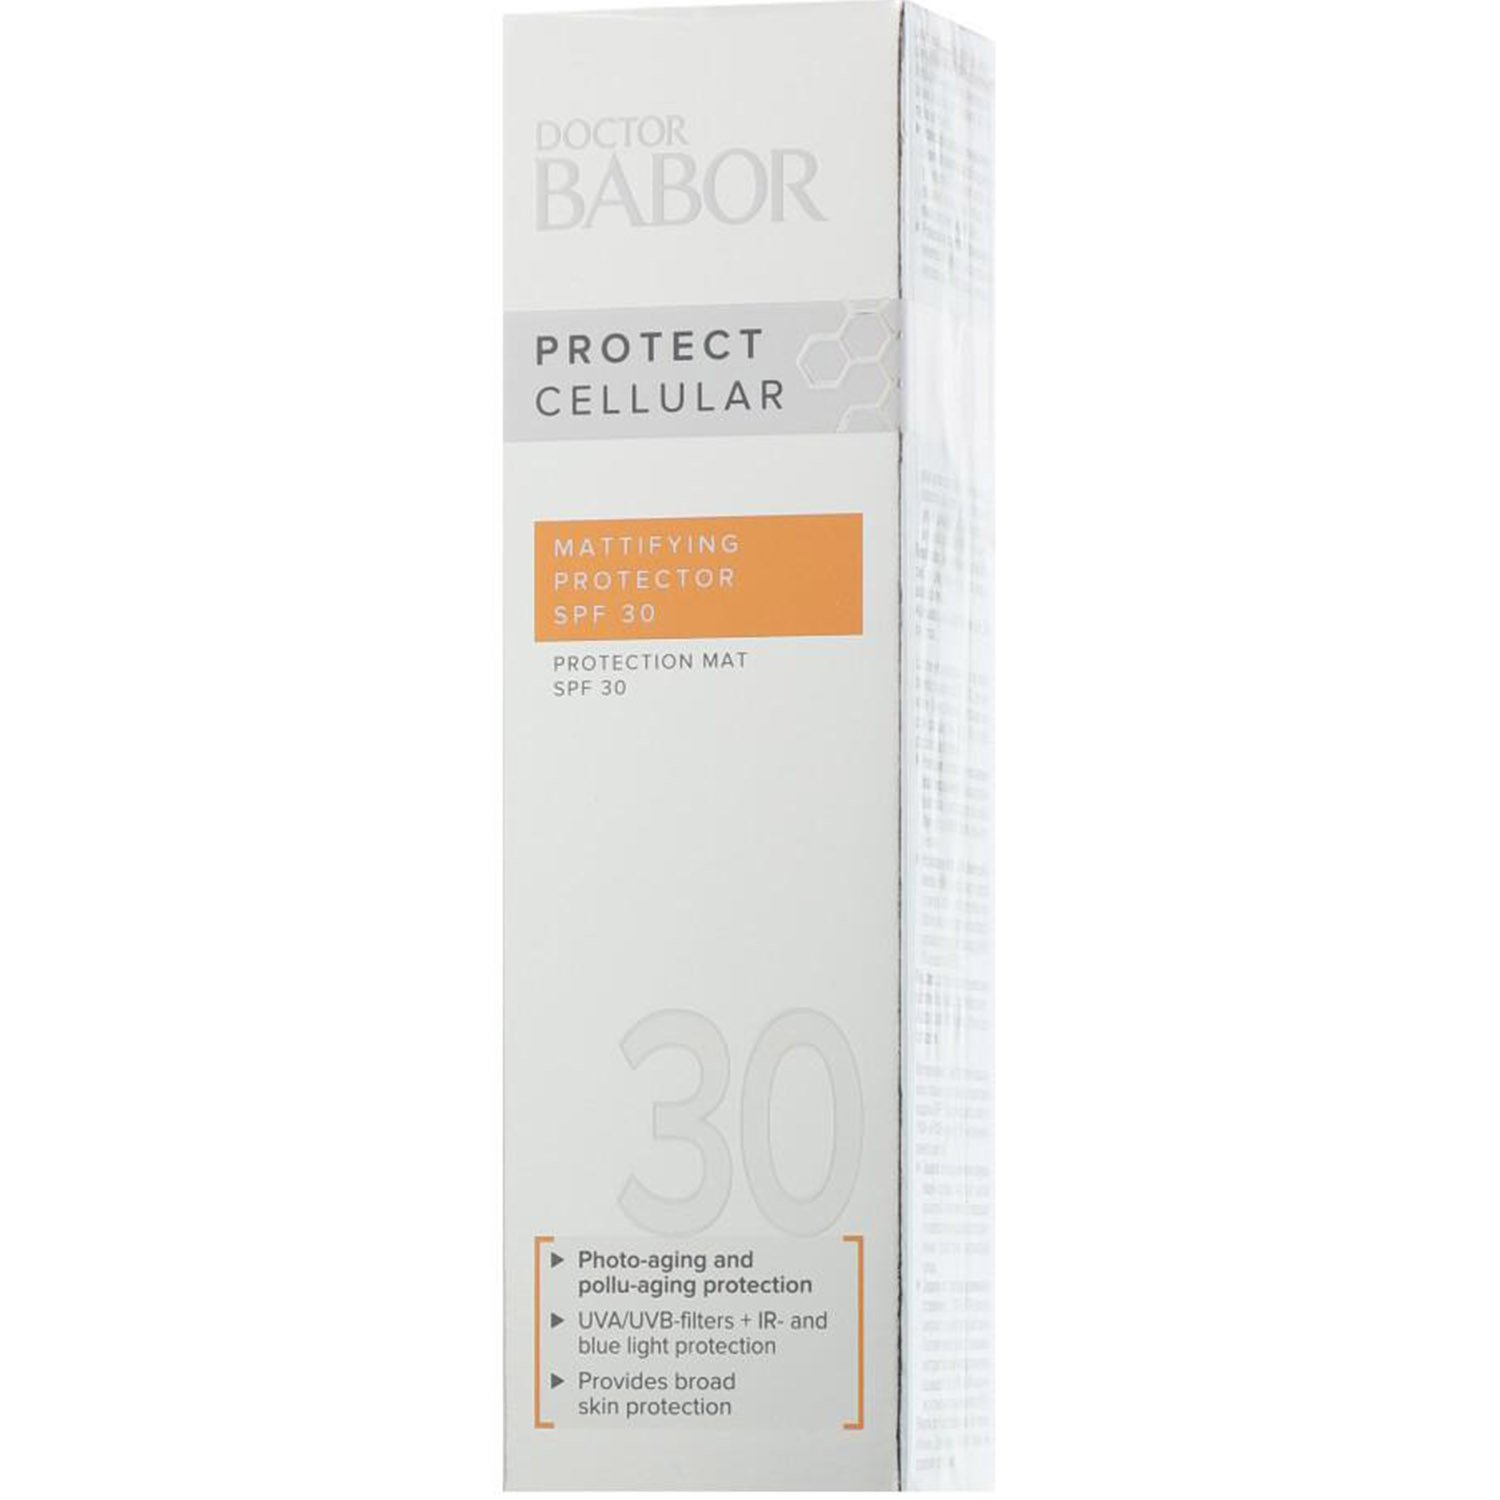 Сонцезахисний флюїд для обличчя Babor Doctor Babor Protect Cellular Mattifying Protector SPF 30, 50 мл - фото 2